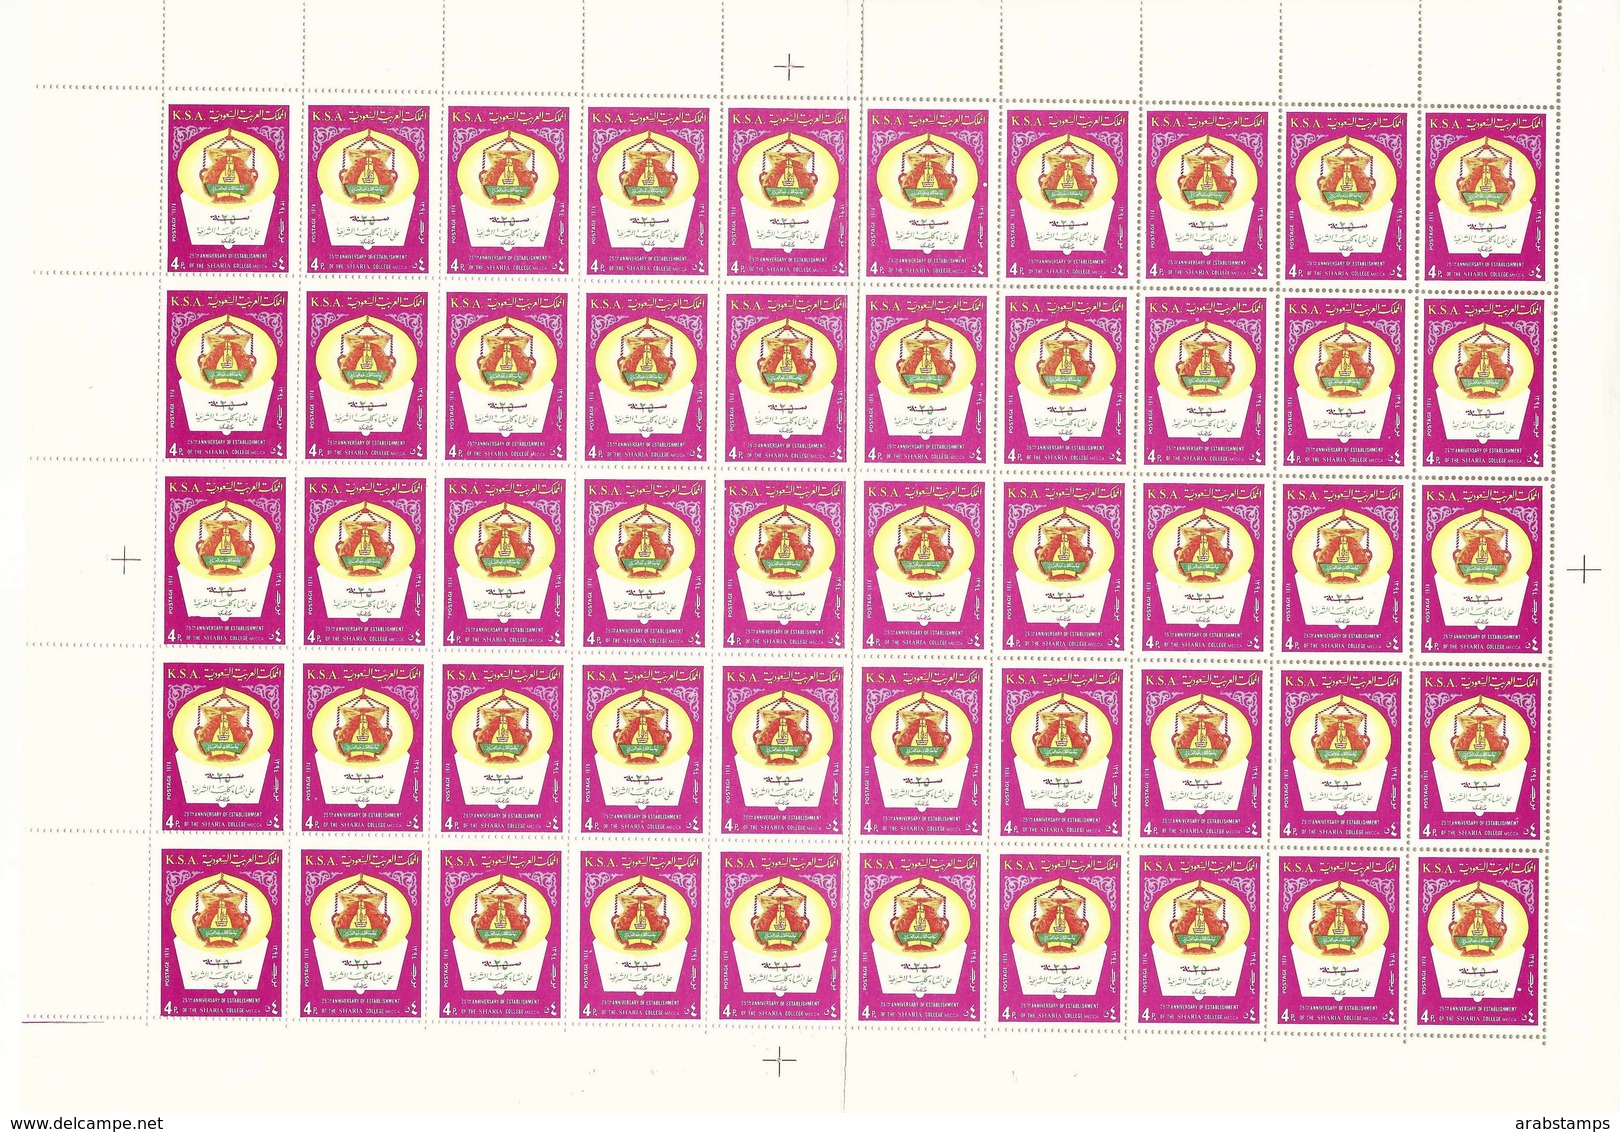 1977 SAUDI ARABIA 25 TH Anniv. Of Founding Of Sharia College ,Makkah Full Sheet 50 Stamps Very Rare MNH - Saudi Arabia